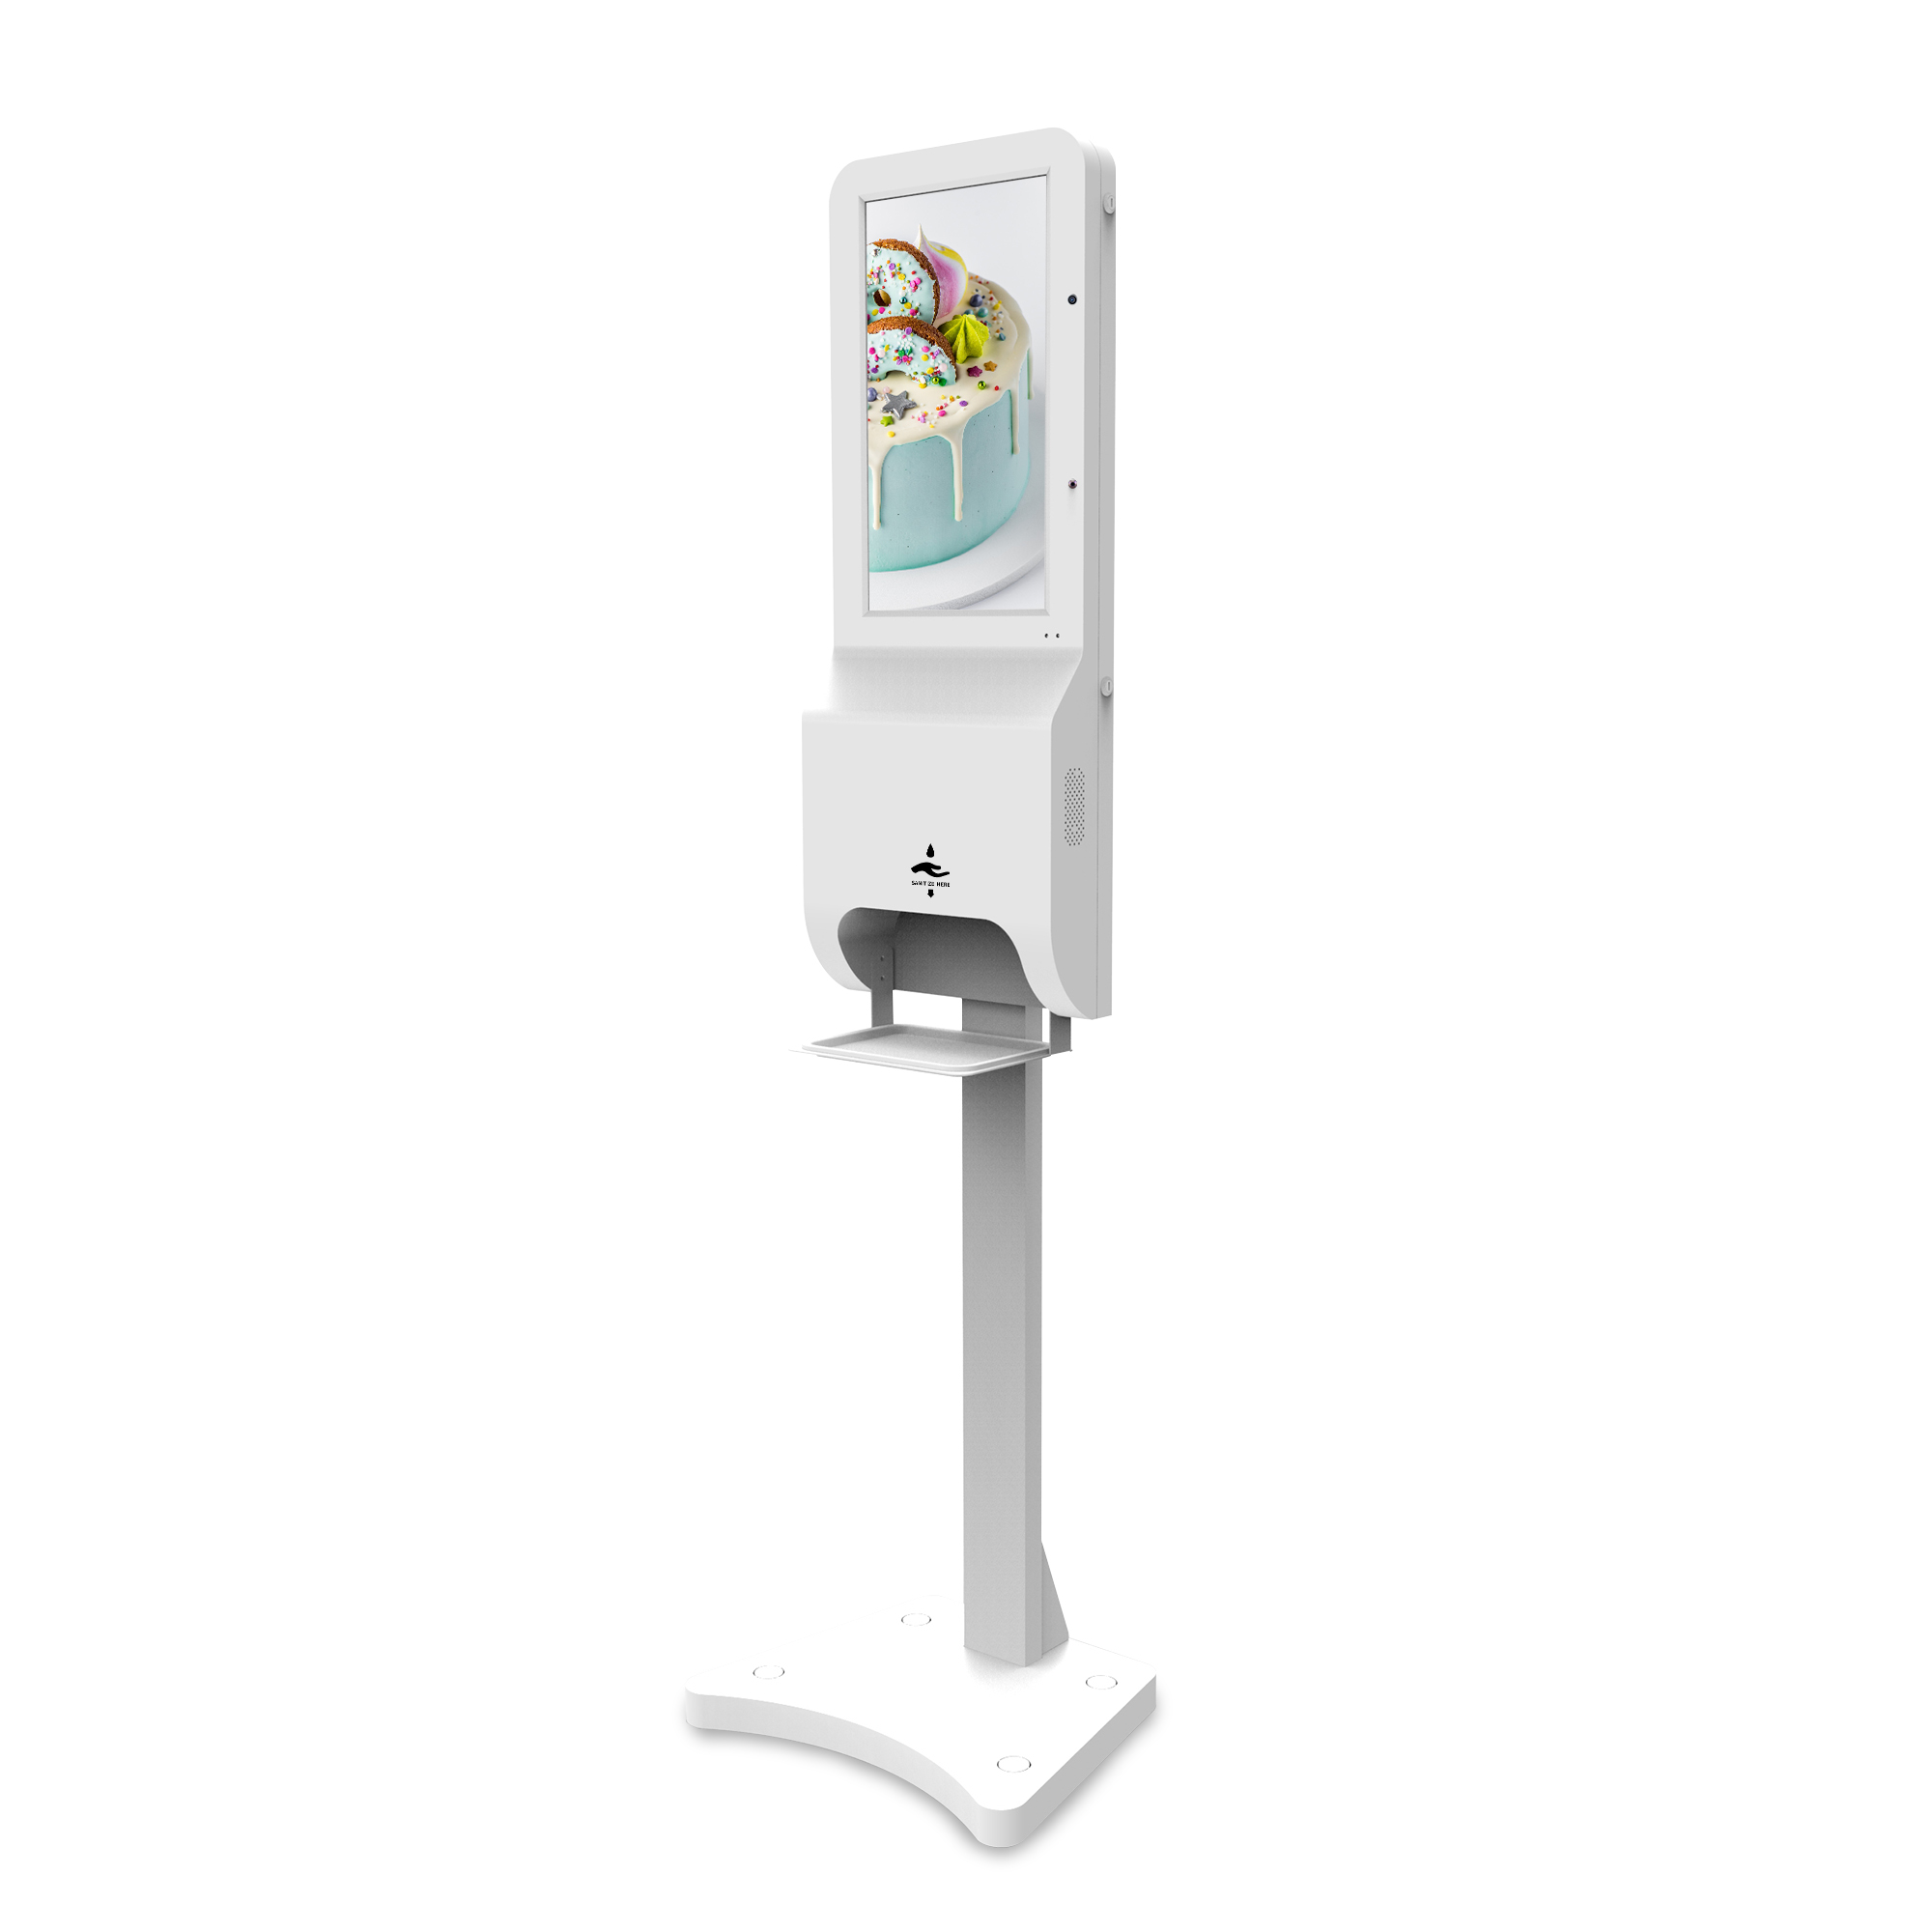 samsung descale automatic water dispenser